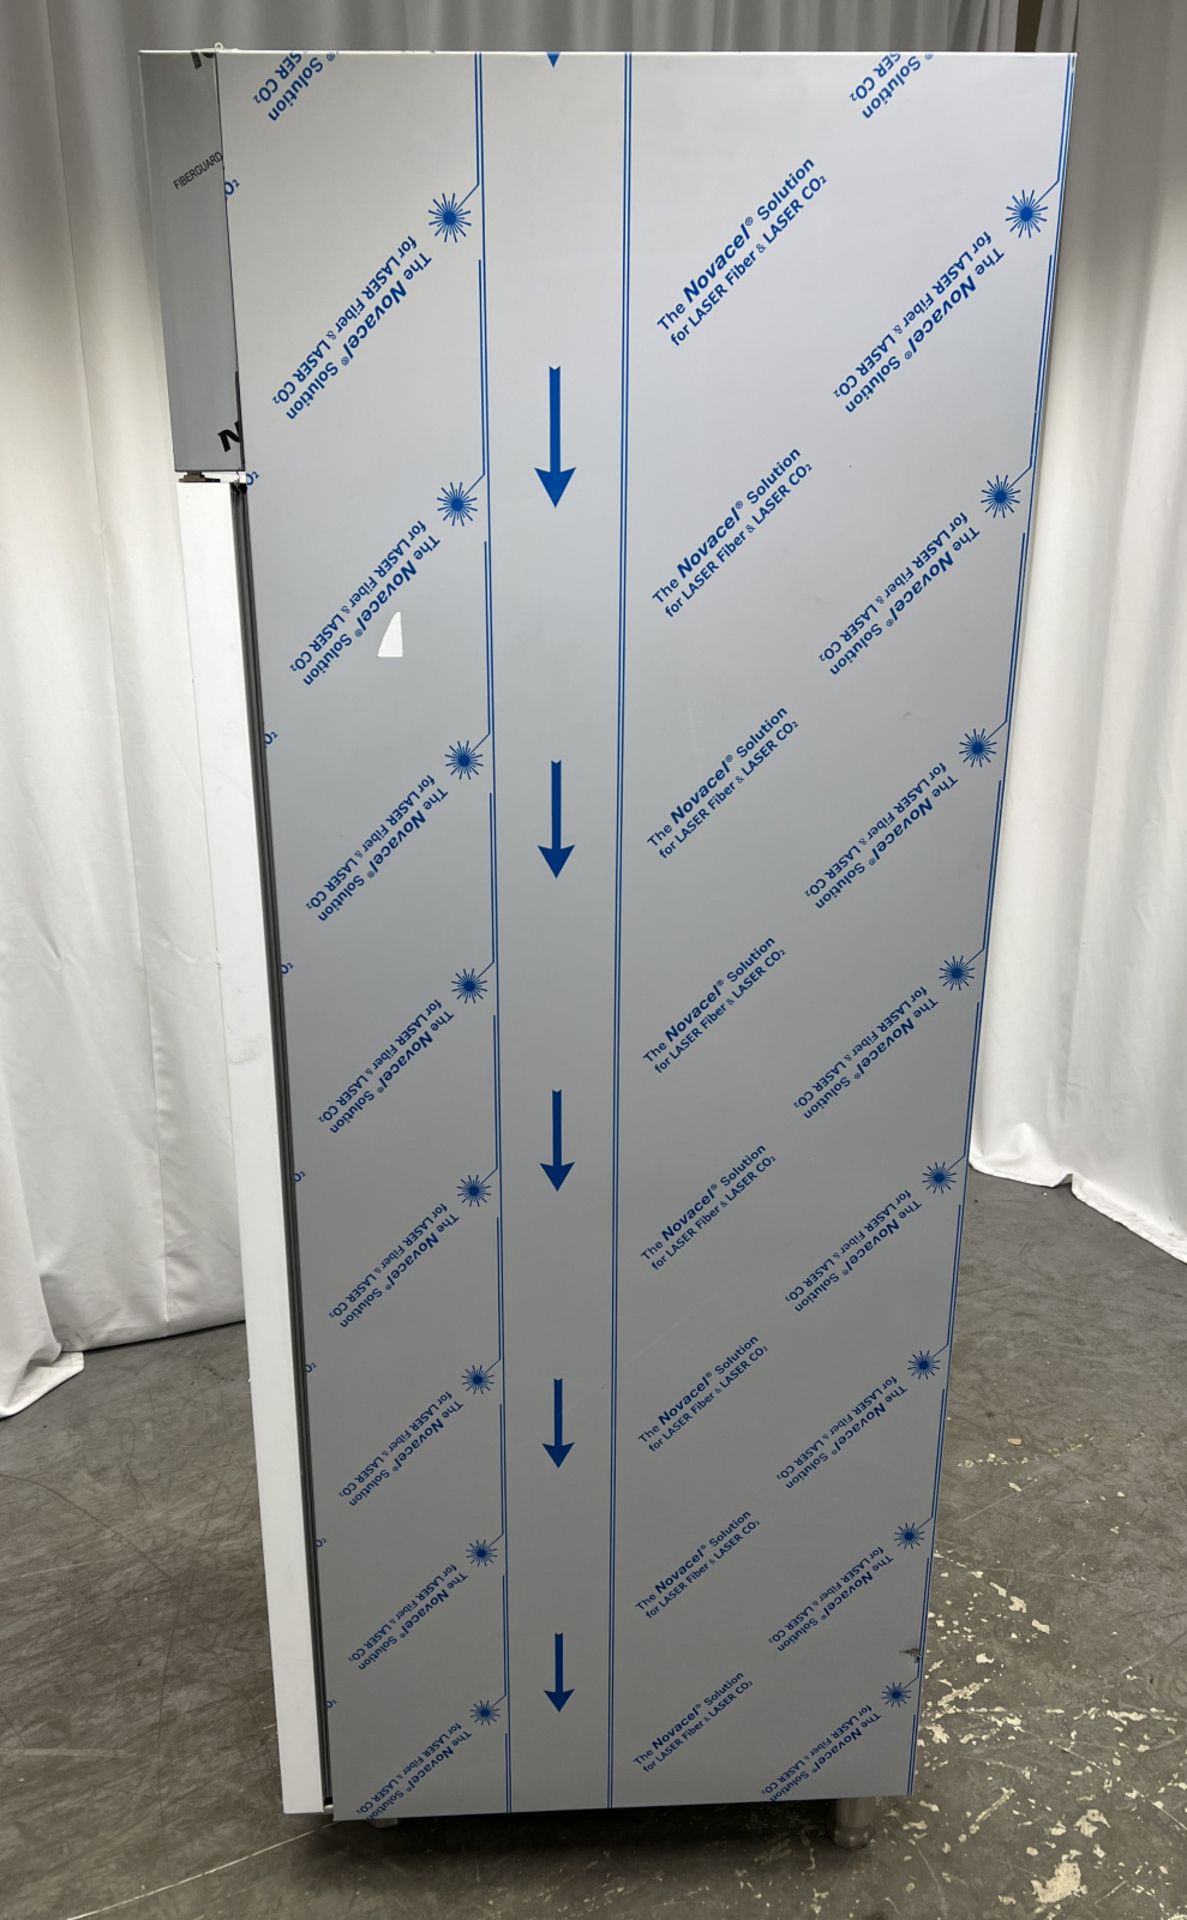 Ice Inox VTS 610 N CR stainless steel single door upright freezer - W 700 x D 865 x H 2080mm - Image 3 of 13